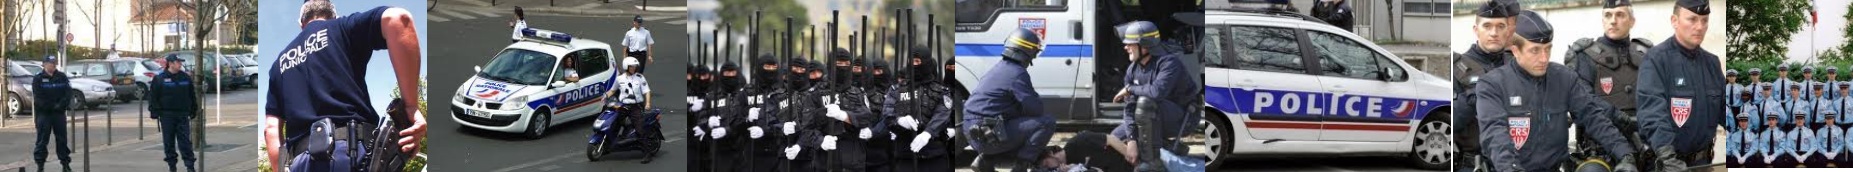 bandeau/police